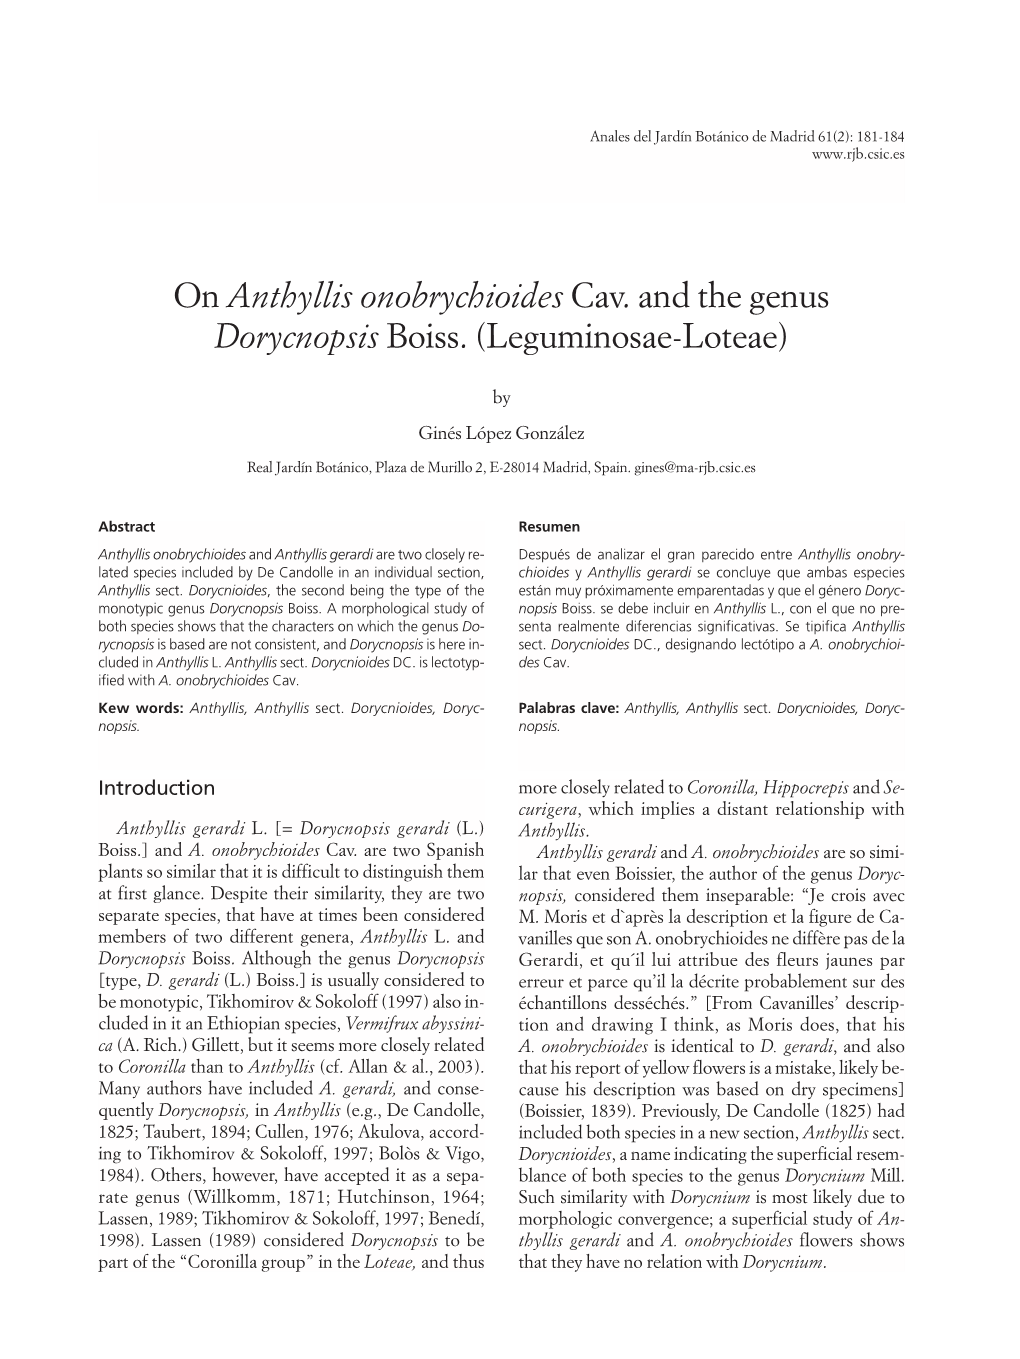 On Anthyllis Onobrychioides Cav. and the Genus Dorycnopsis Boiss. (Leguminosae-Loteae)